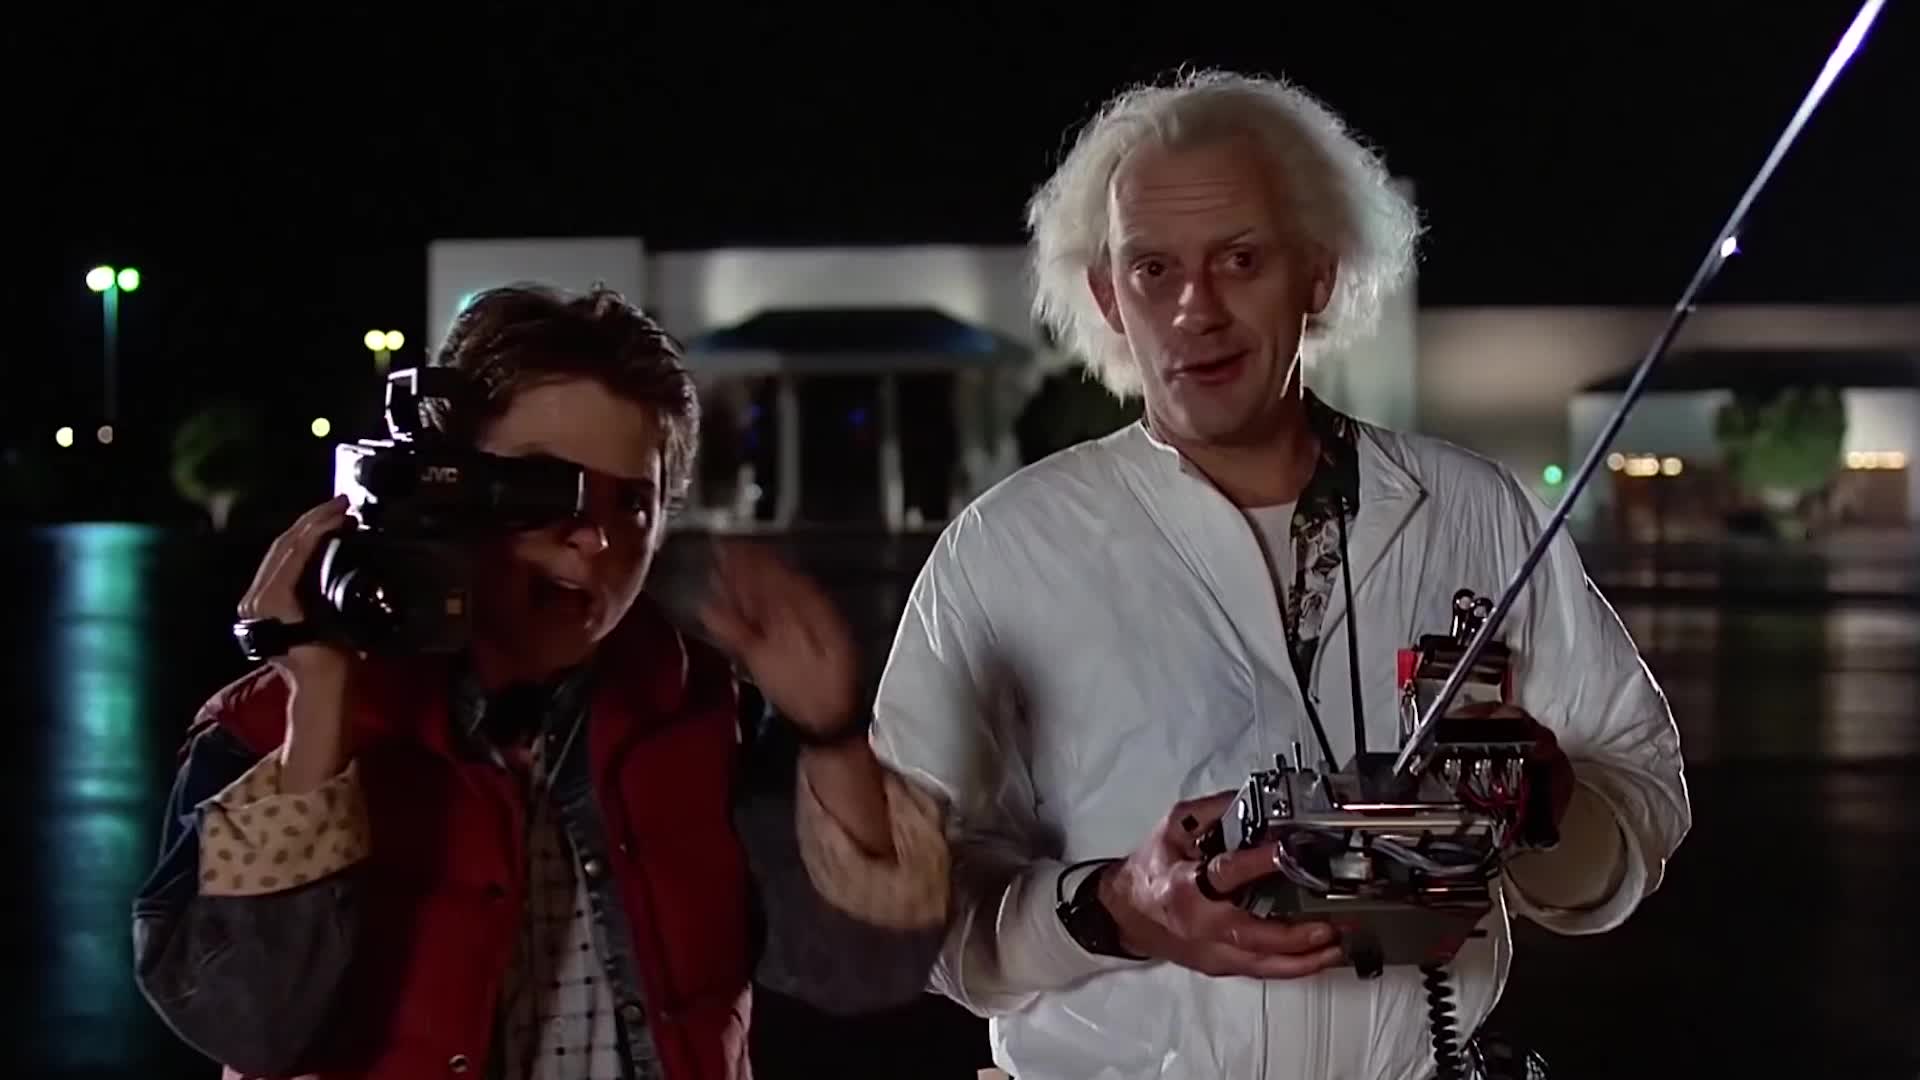 Back to the Future (1985) - IMDb